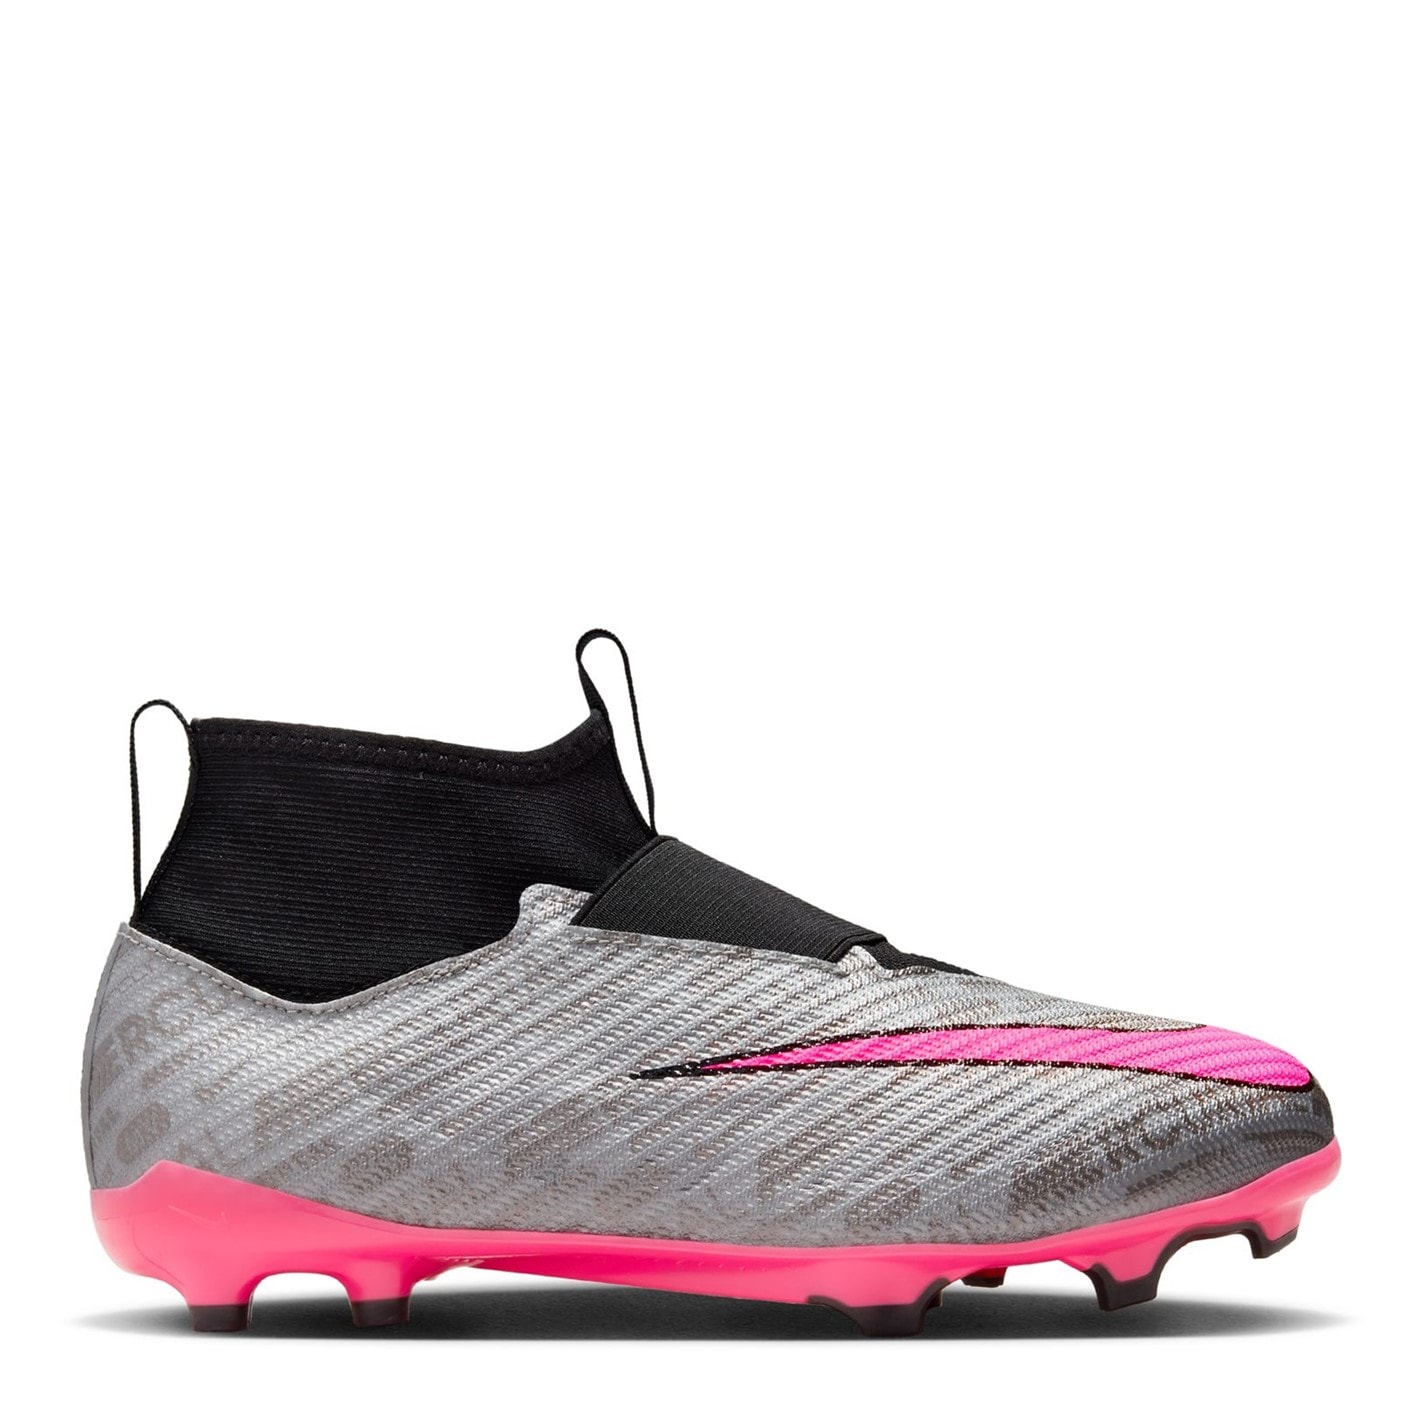 Ghete de fotbal Nike Mercurial Superfly Pro DF FG pentru copii argintiu roz negru